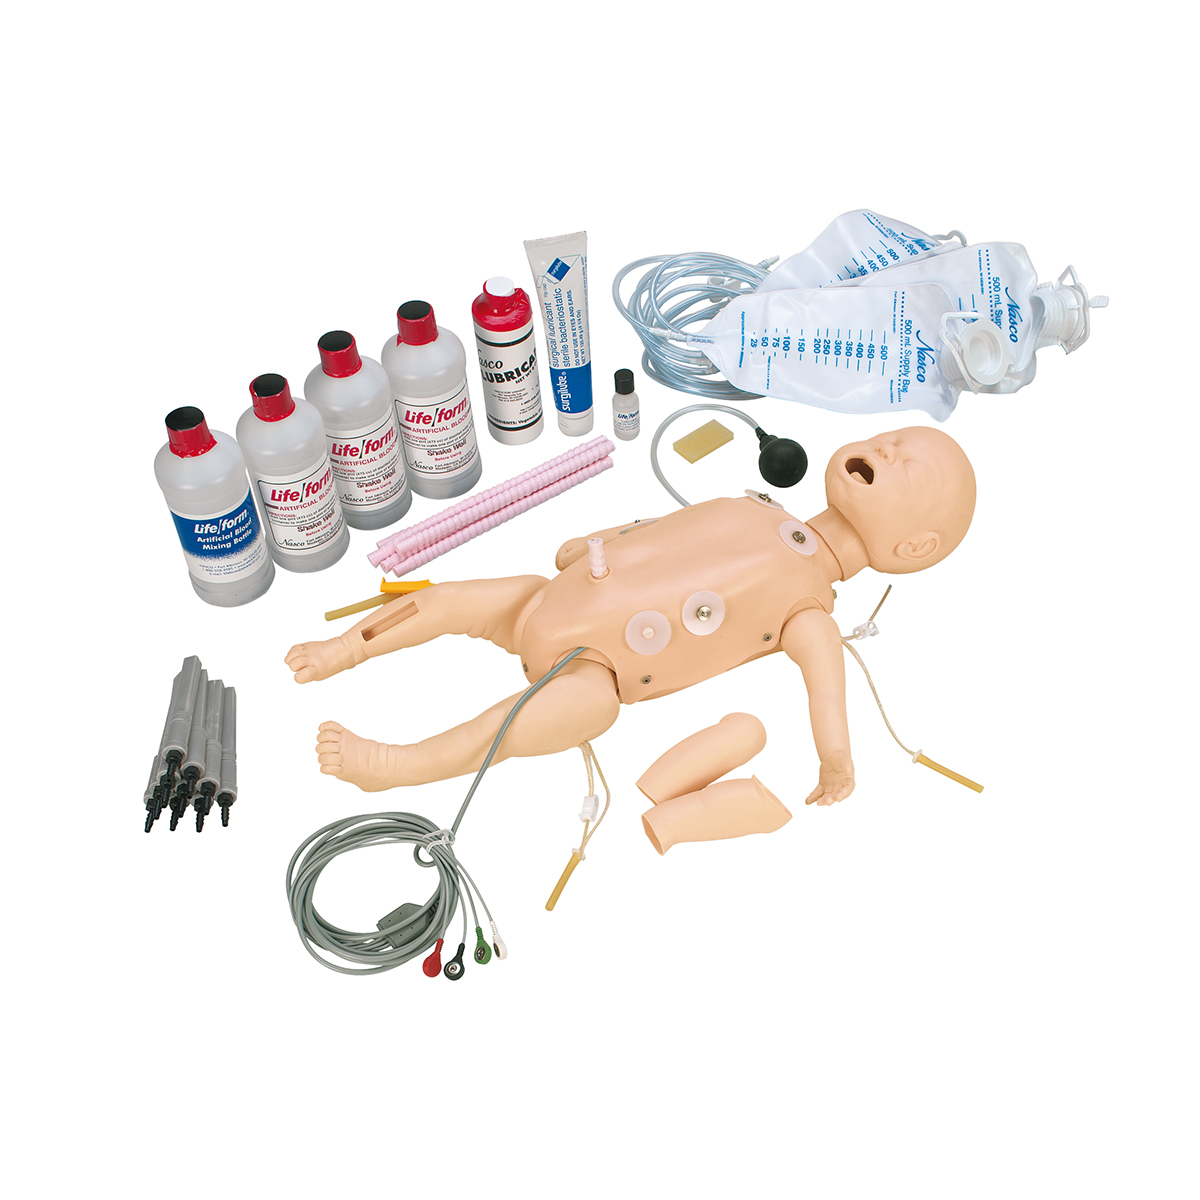 Deluxe Baby-Reanimationspuppe mit EKG - 1018146 - W44090 - Life